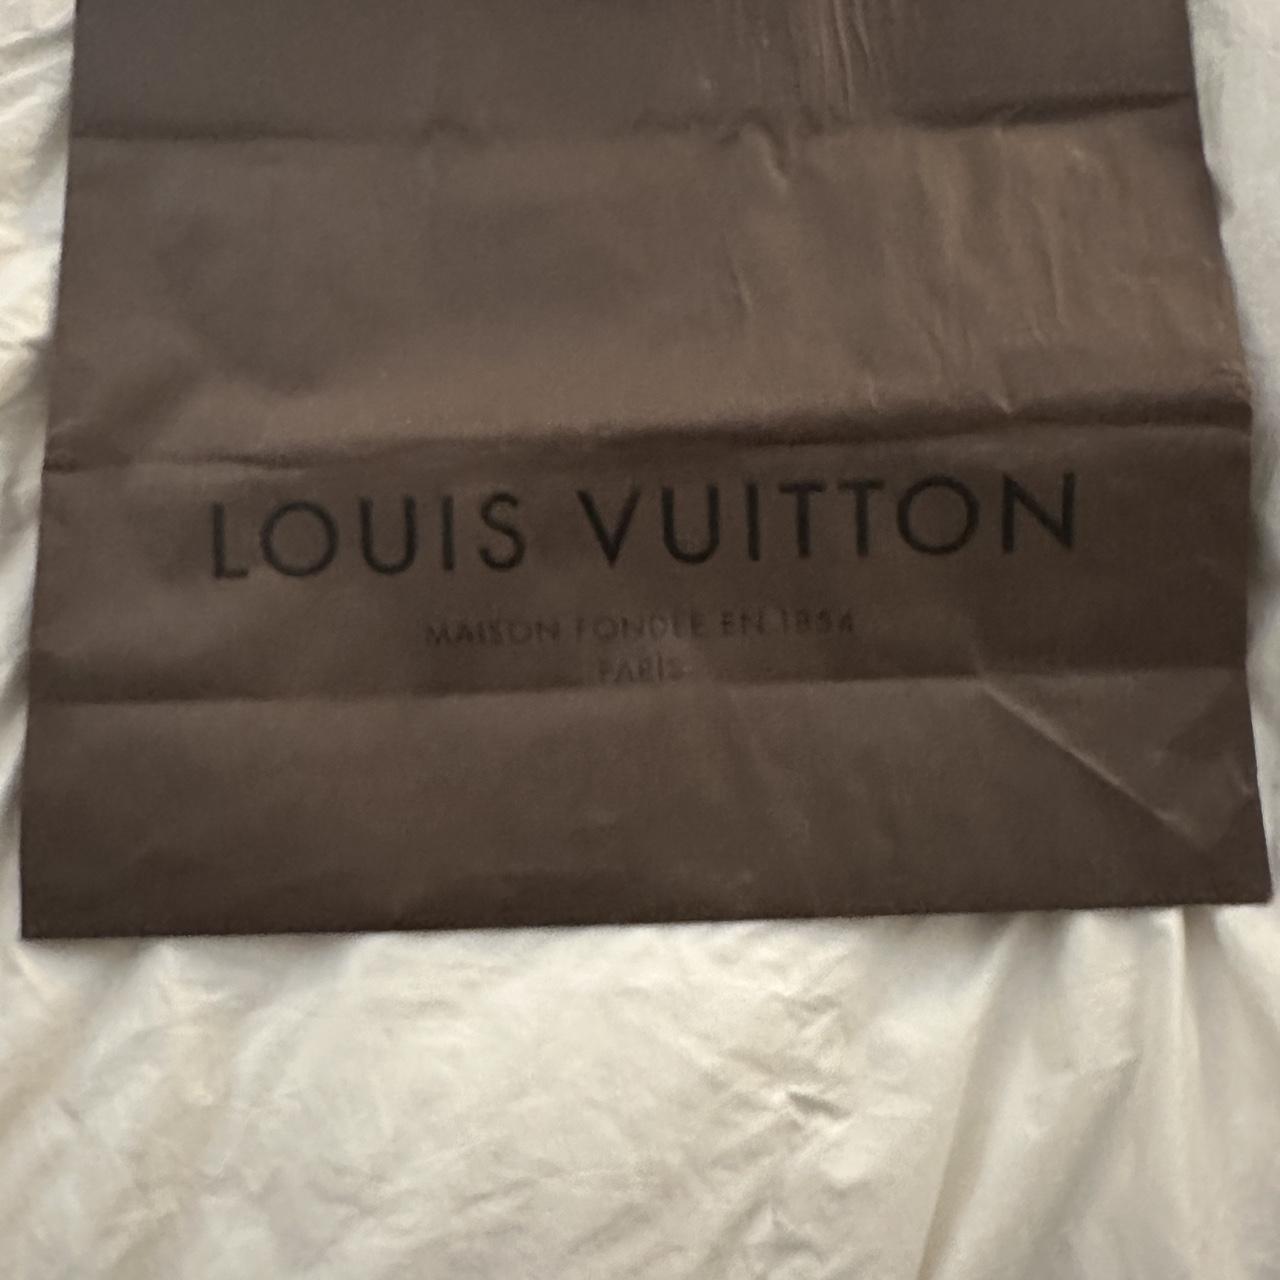 Louis Vuitton bag - Depop